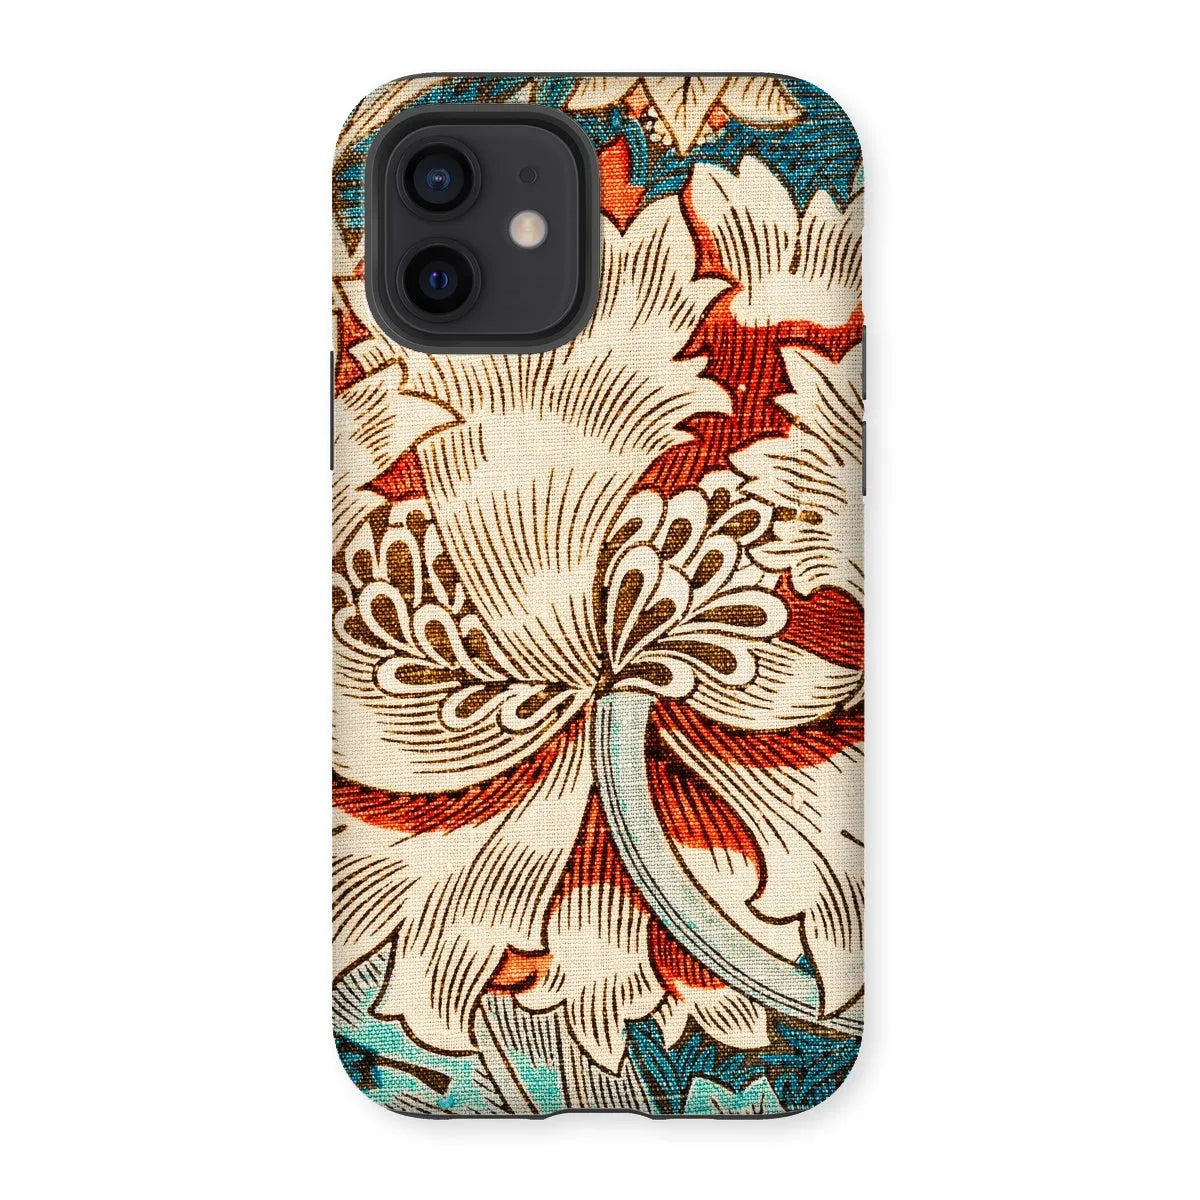 Honeysuckle Too By William Morris Phone Case - Iphone 12 / Matte - Mobile Phone Cases - Aesthetic Art